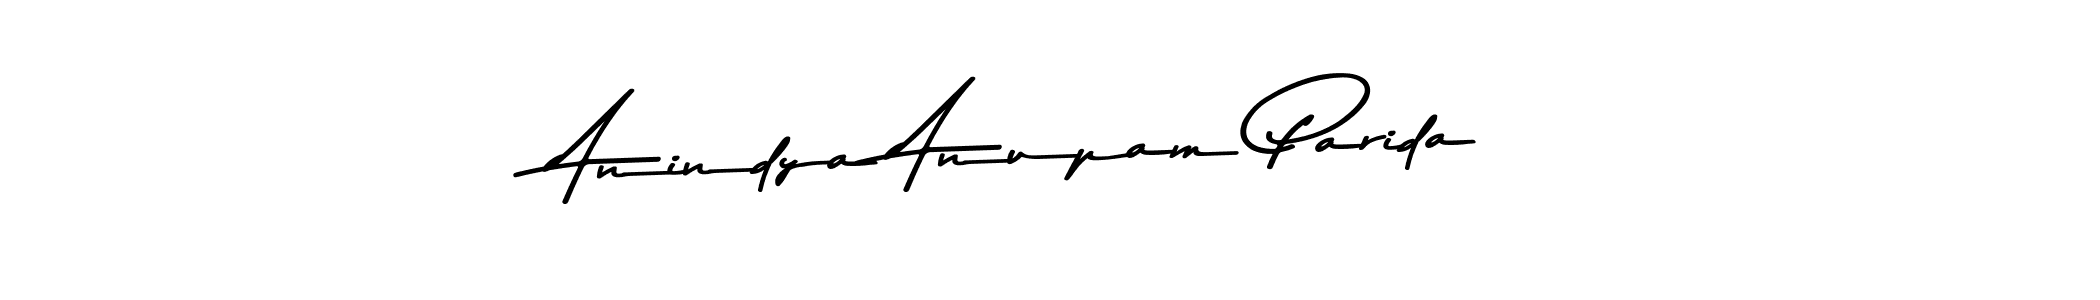 Anindya Anupam Parida stylish signature style. Best Handwritten Sign (Asem Kandis PERSONAL USE) for my name. Handwritten Signature Collection Ideas for my name Anindya Anupam Parida. Anindya Anupam Parida signature style 9 images and pictures png